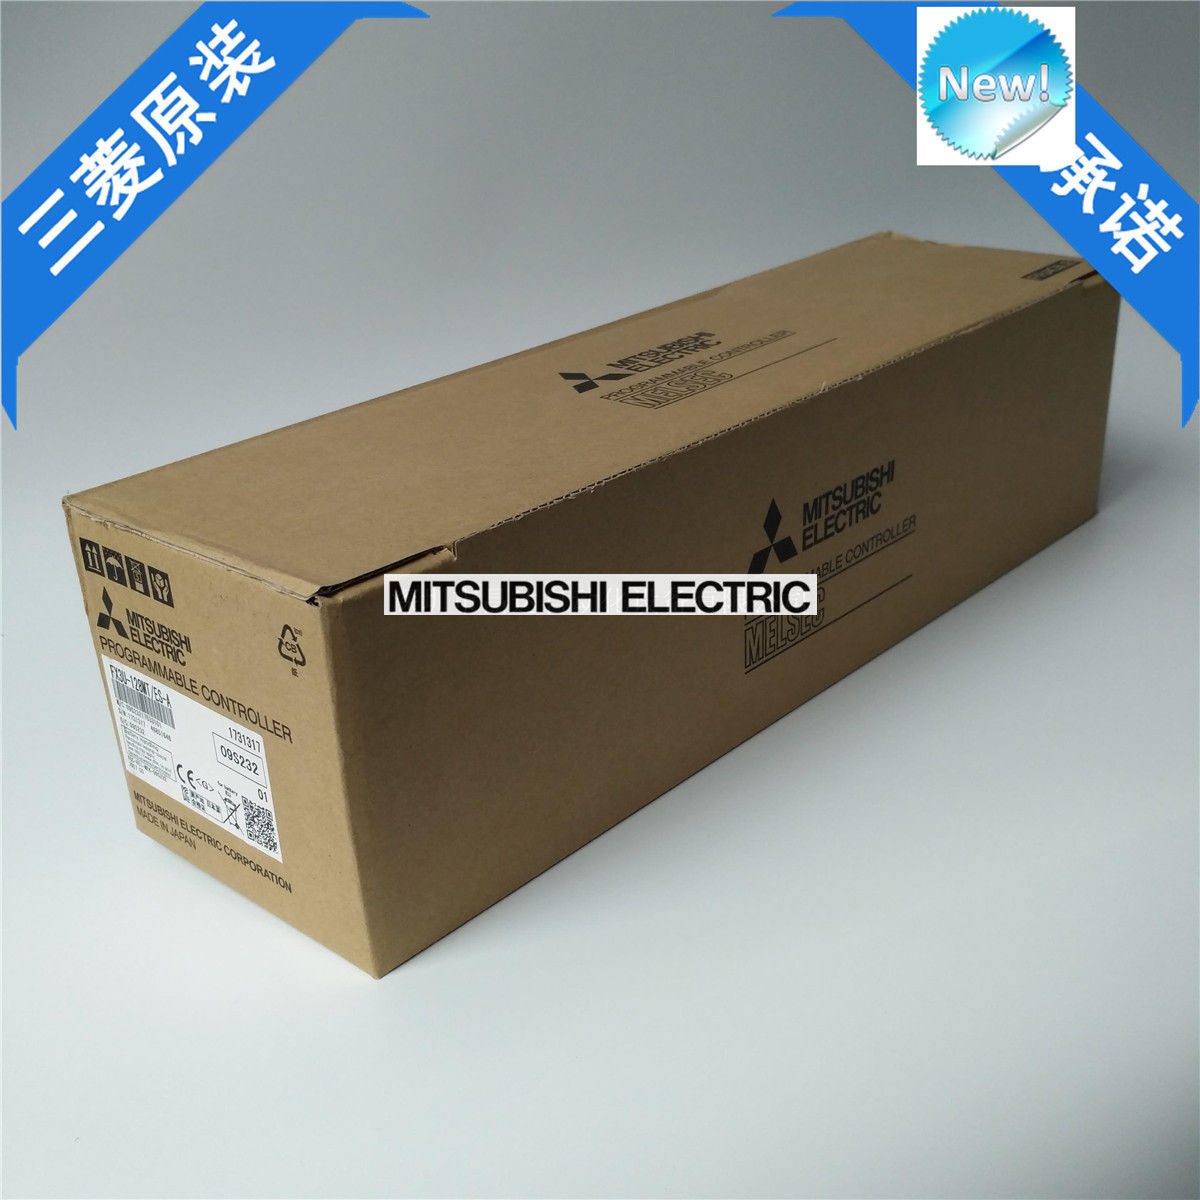 Brand New Mitsubishi PLC FX3U-128MT/ES-A In Box FX3U128MTESA - Click Image to Close